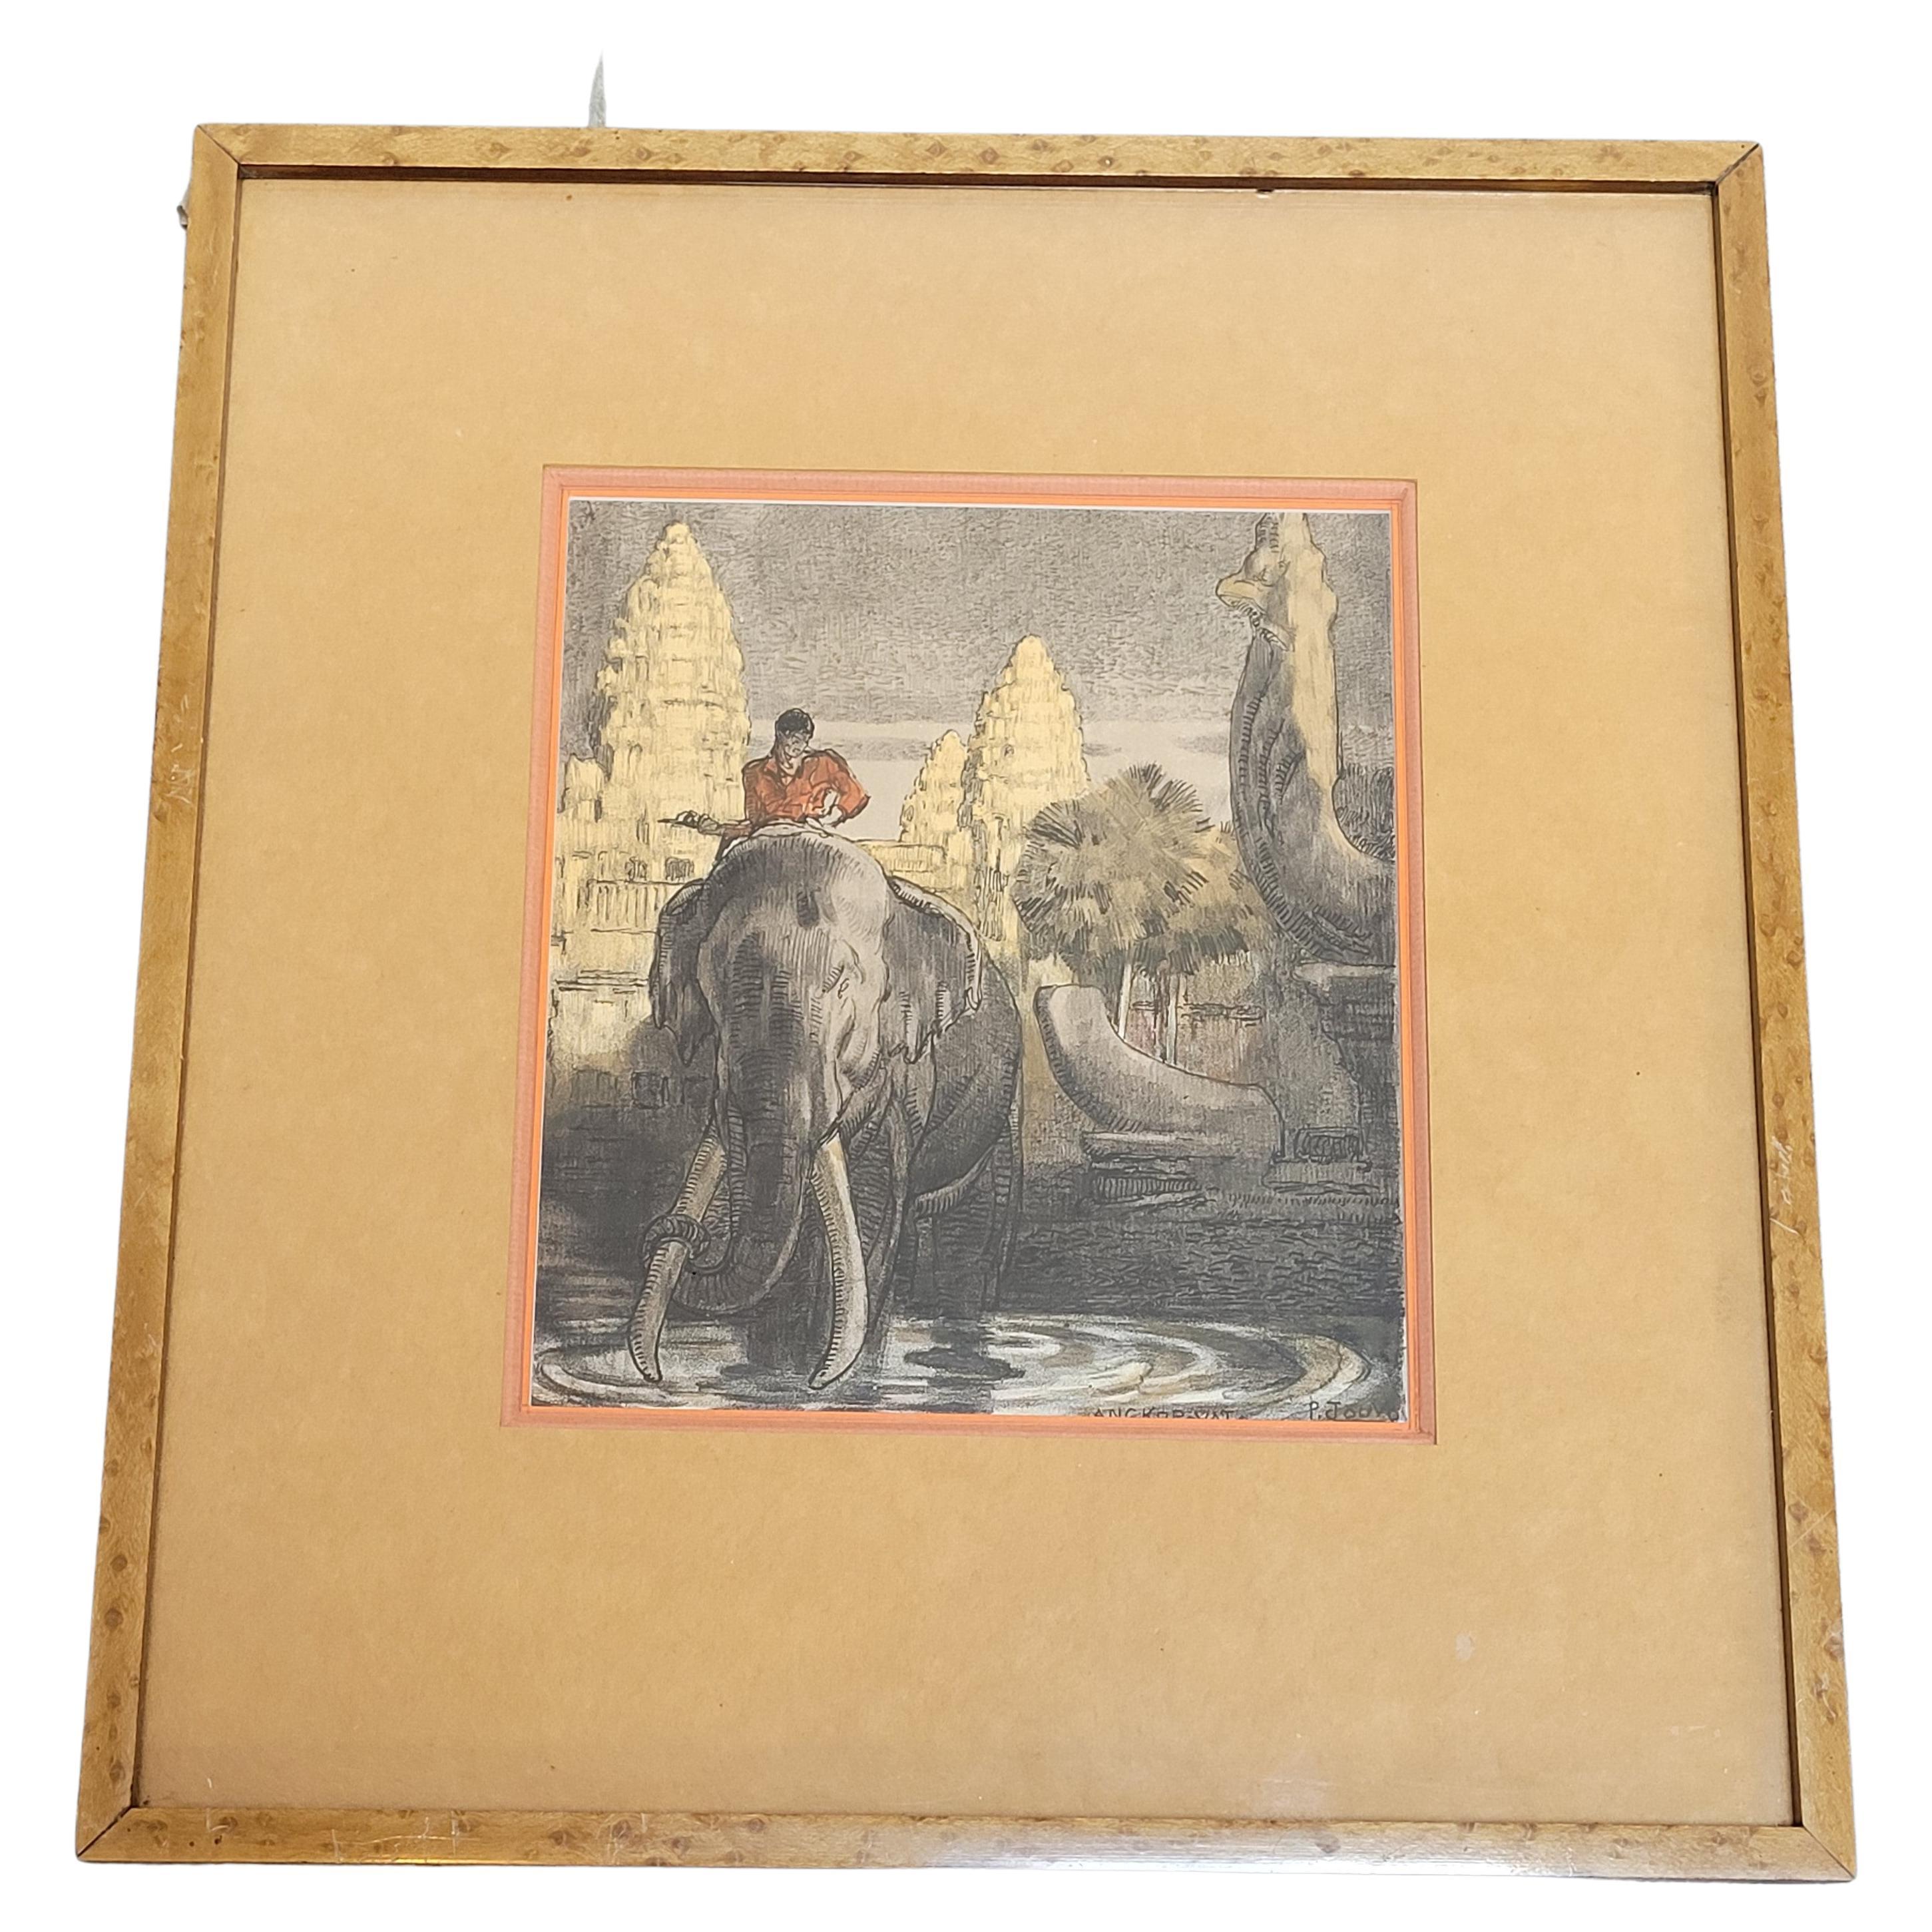 P Jouve, Angkor Wat, gerahmte Lithographie, XX. Jahrhundert